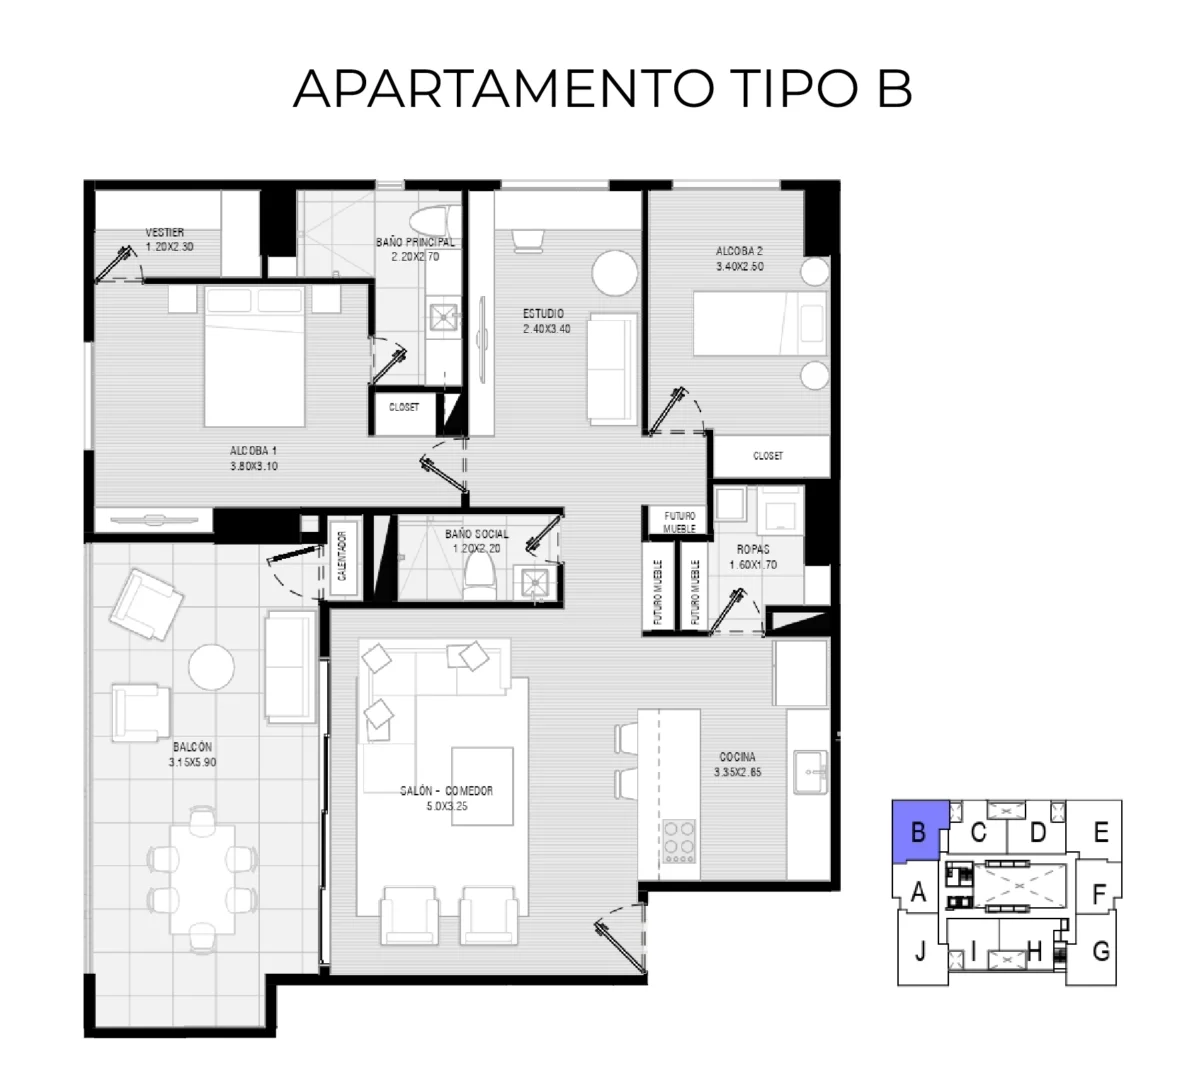 Apartamento Tipo 5